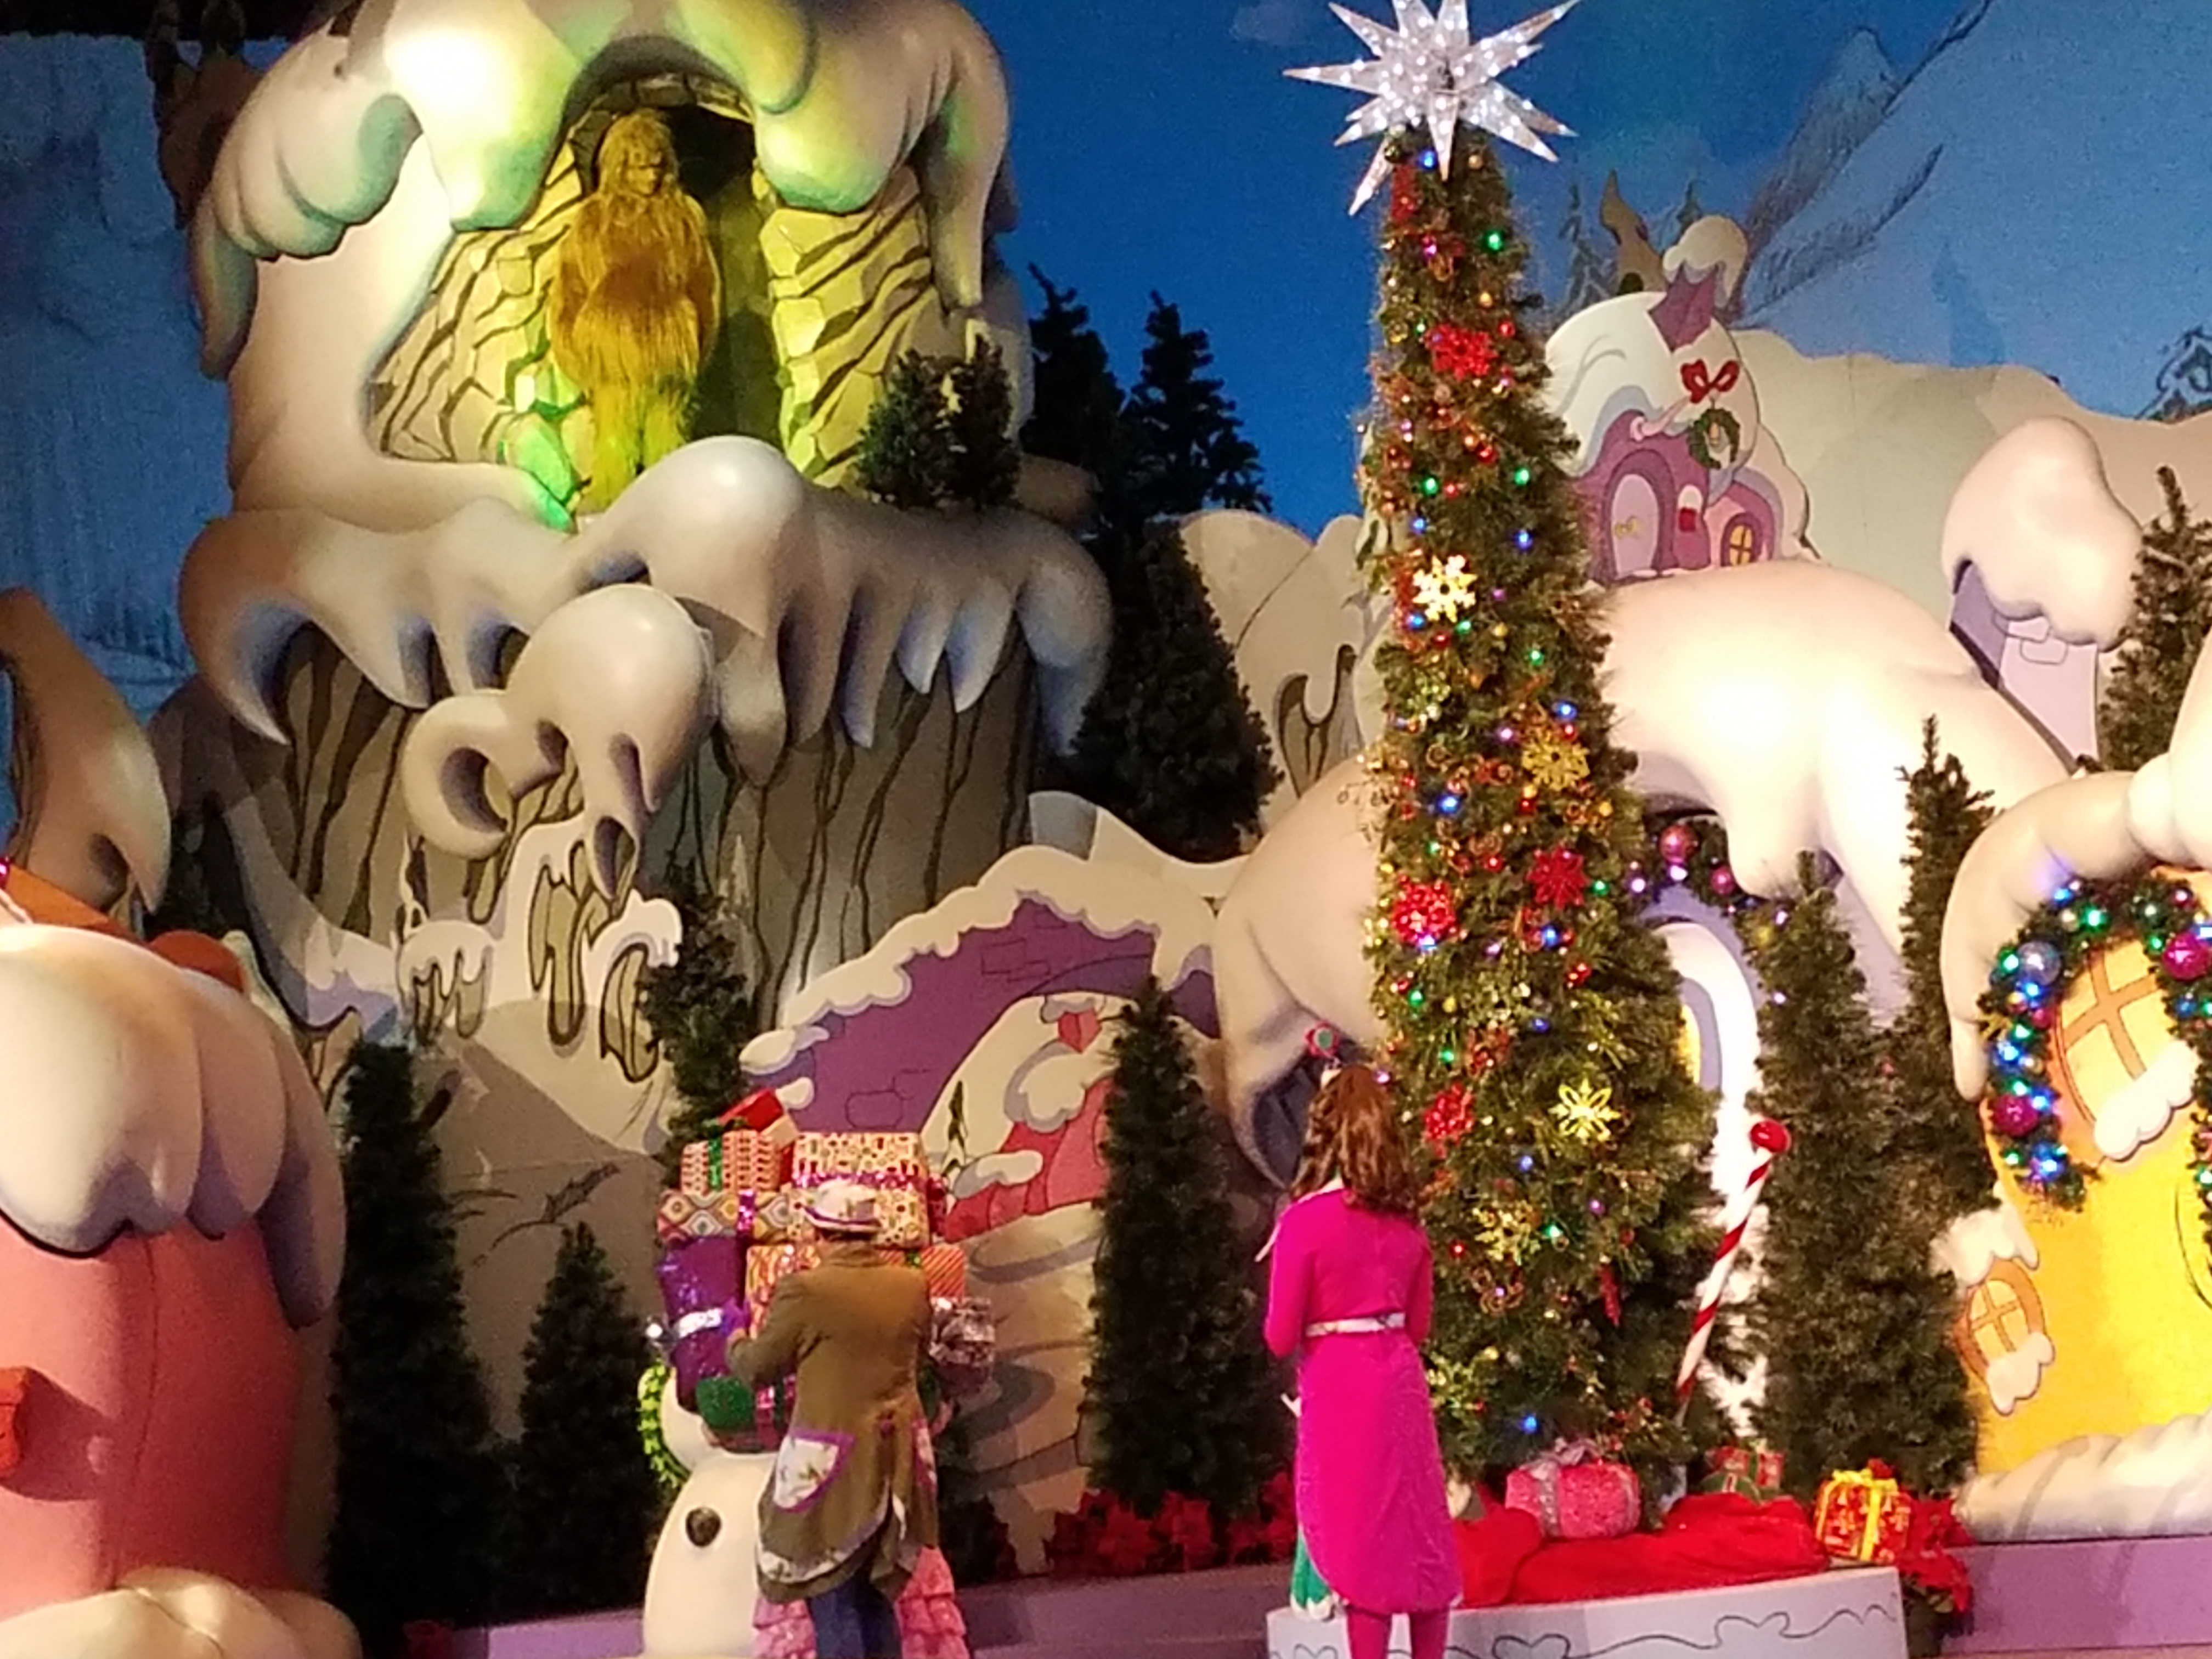 Universal Orlando - Universal Studios - Minions - Macy's -Universal Holiday parade featuring Macy's - Christmas - Harry Potter - Grinchmas - UnofficialUniversal.com